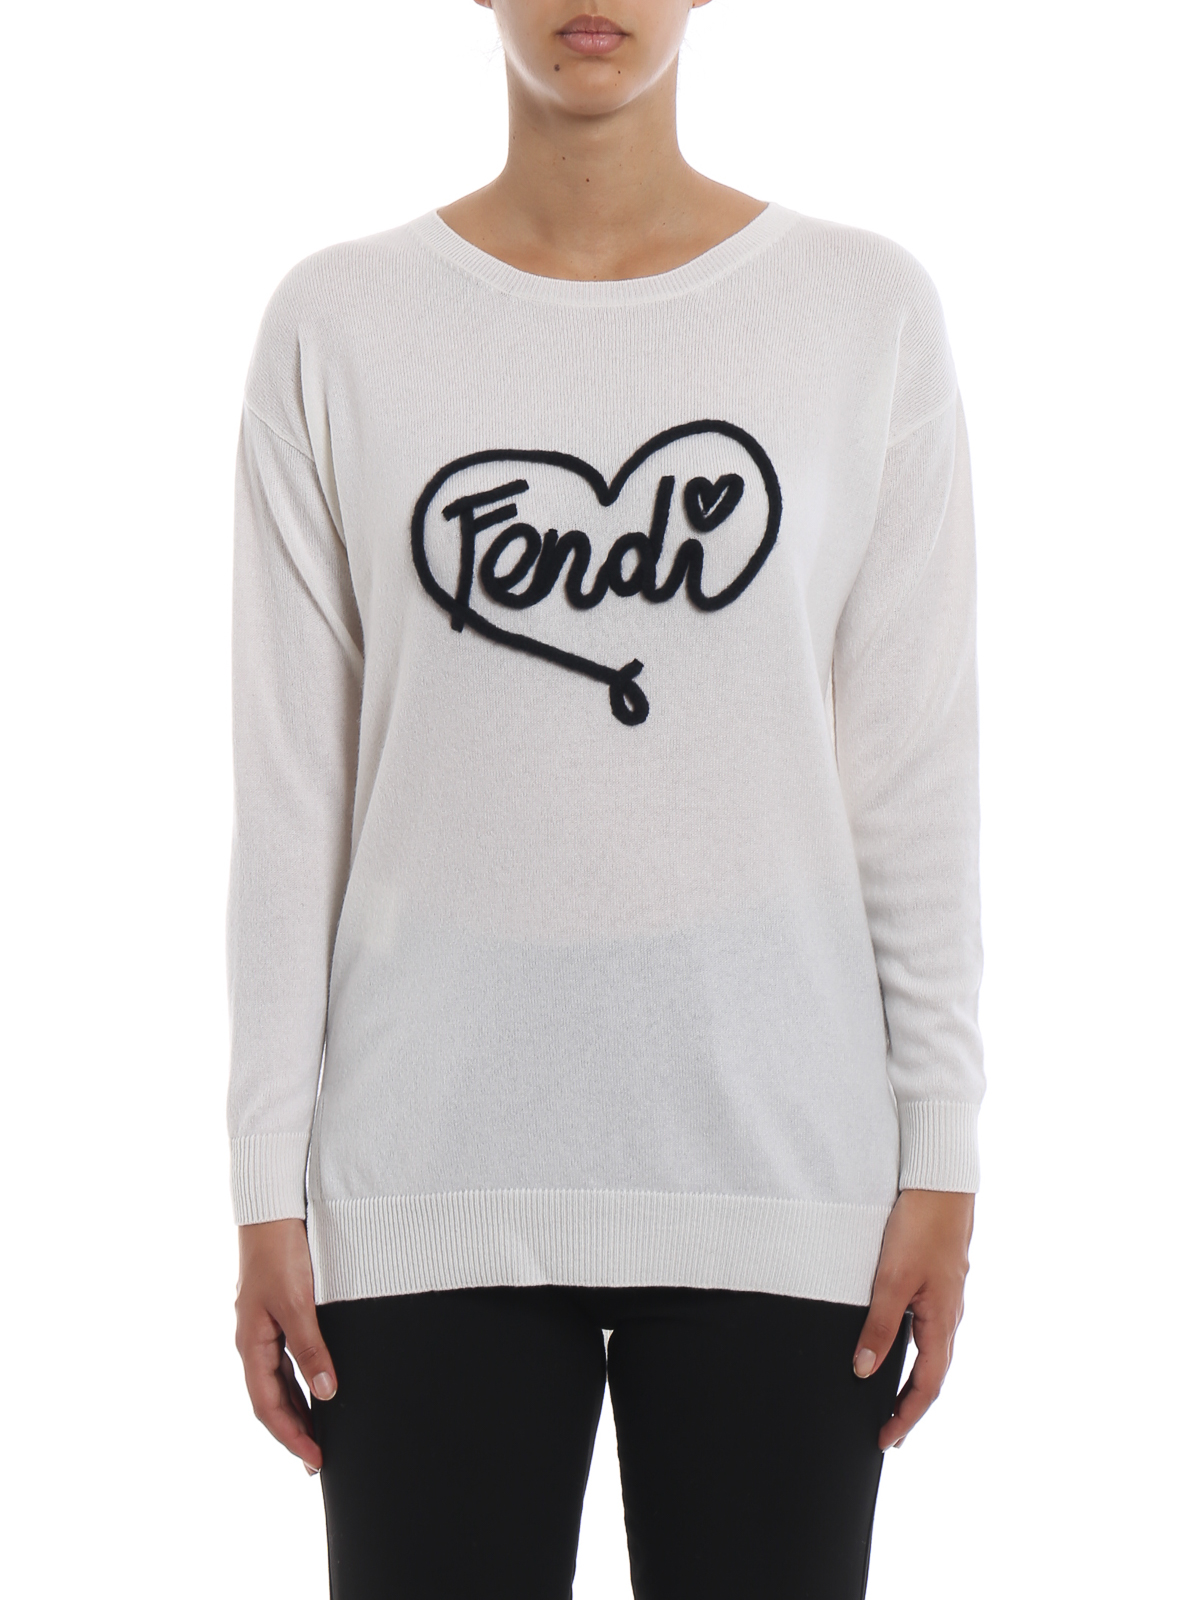 Heart Fendi embroidery cashmere sweater 